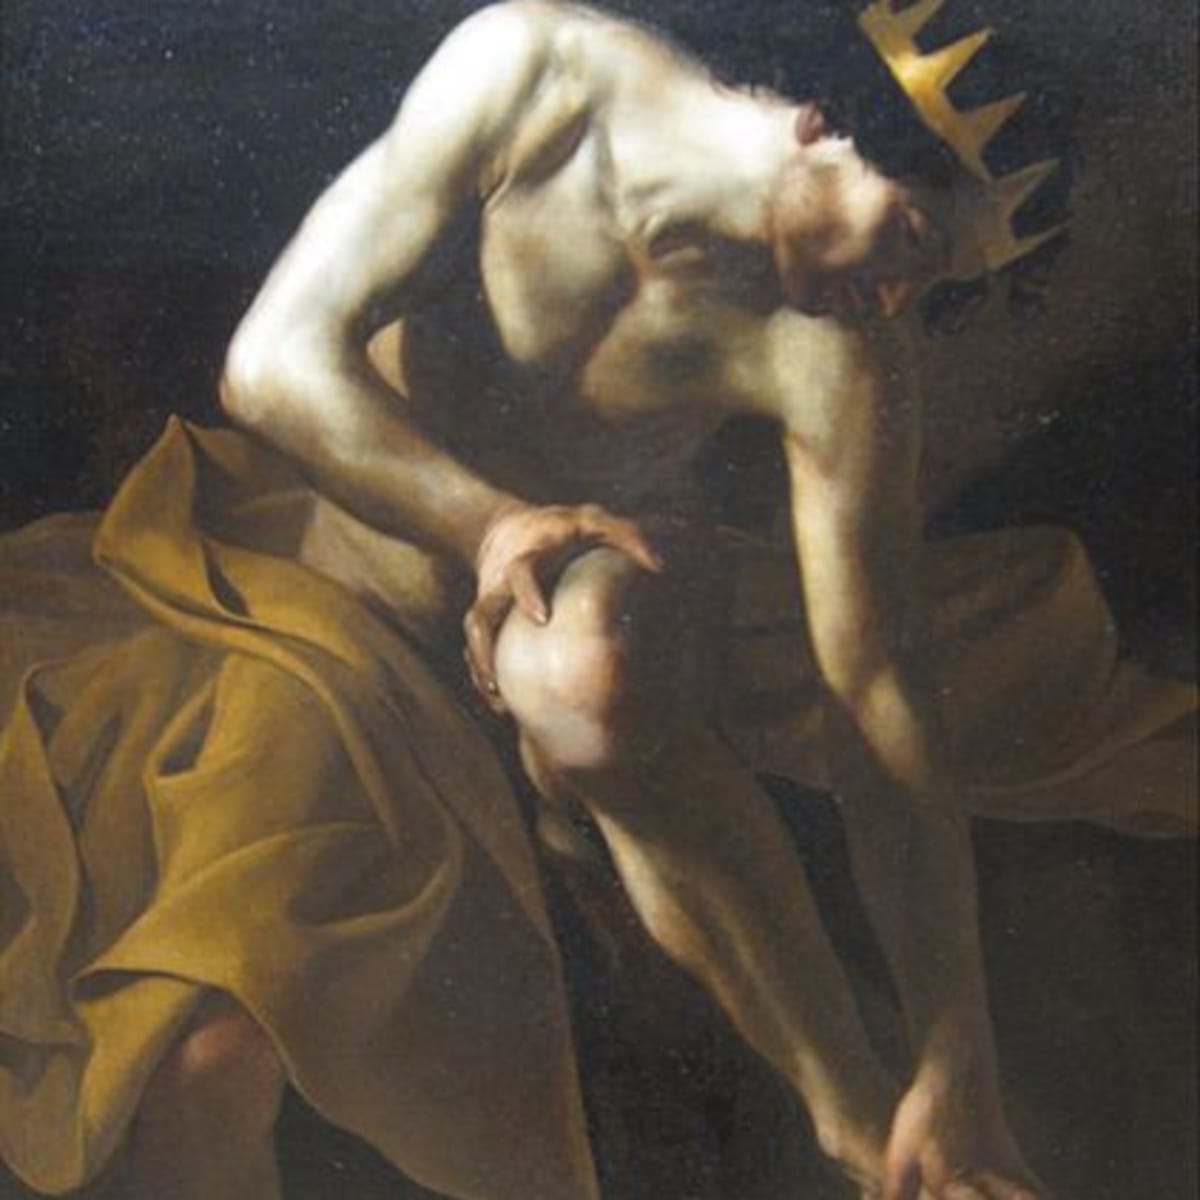 King Midas And The Golden Touch (The Curse of Greed) #mythology #greek, greek mythology